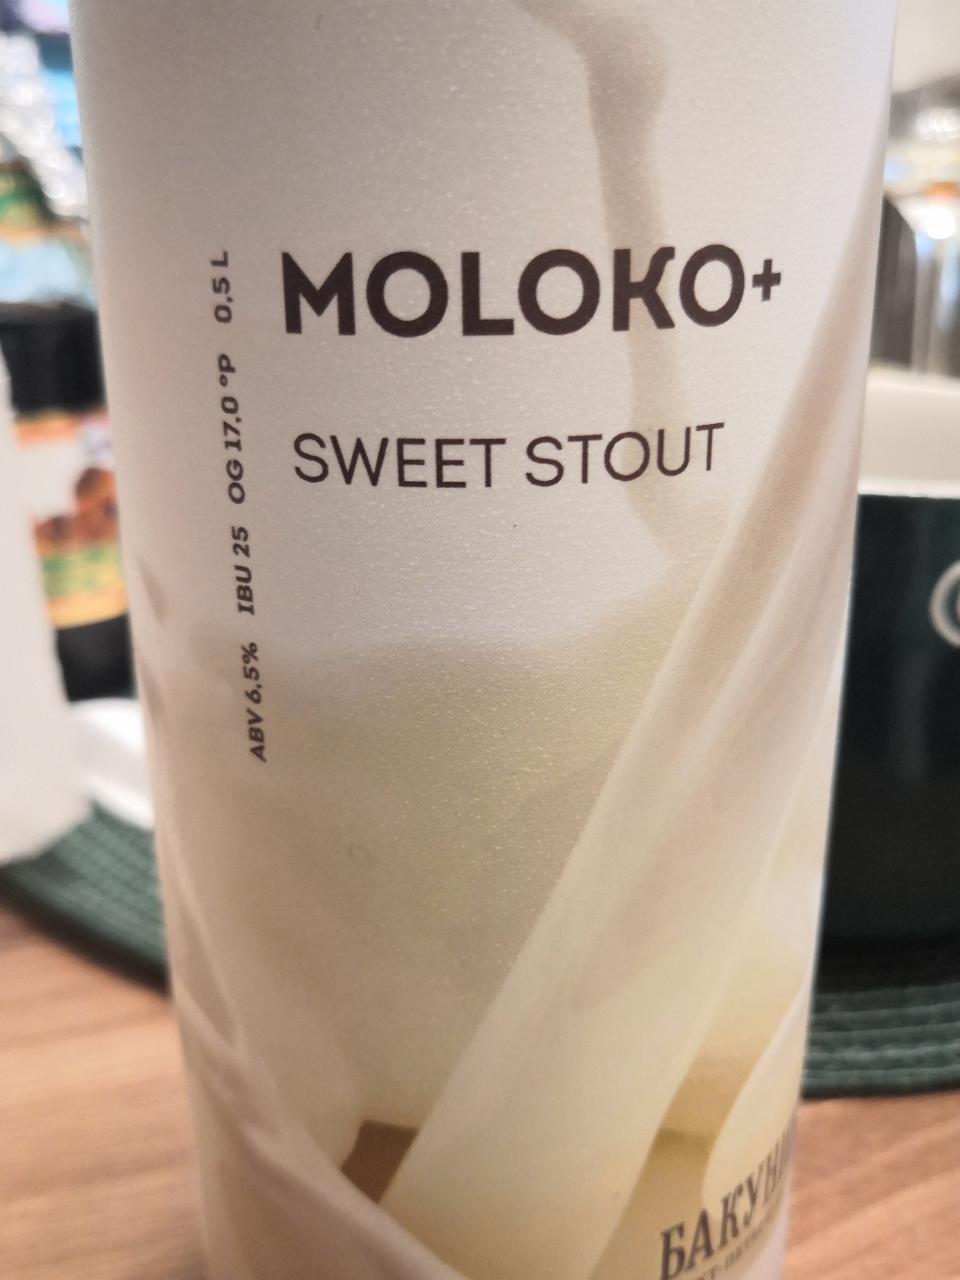 Фото - пивной напиток Sweet stout MOLOKO+ Бпкунин